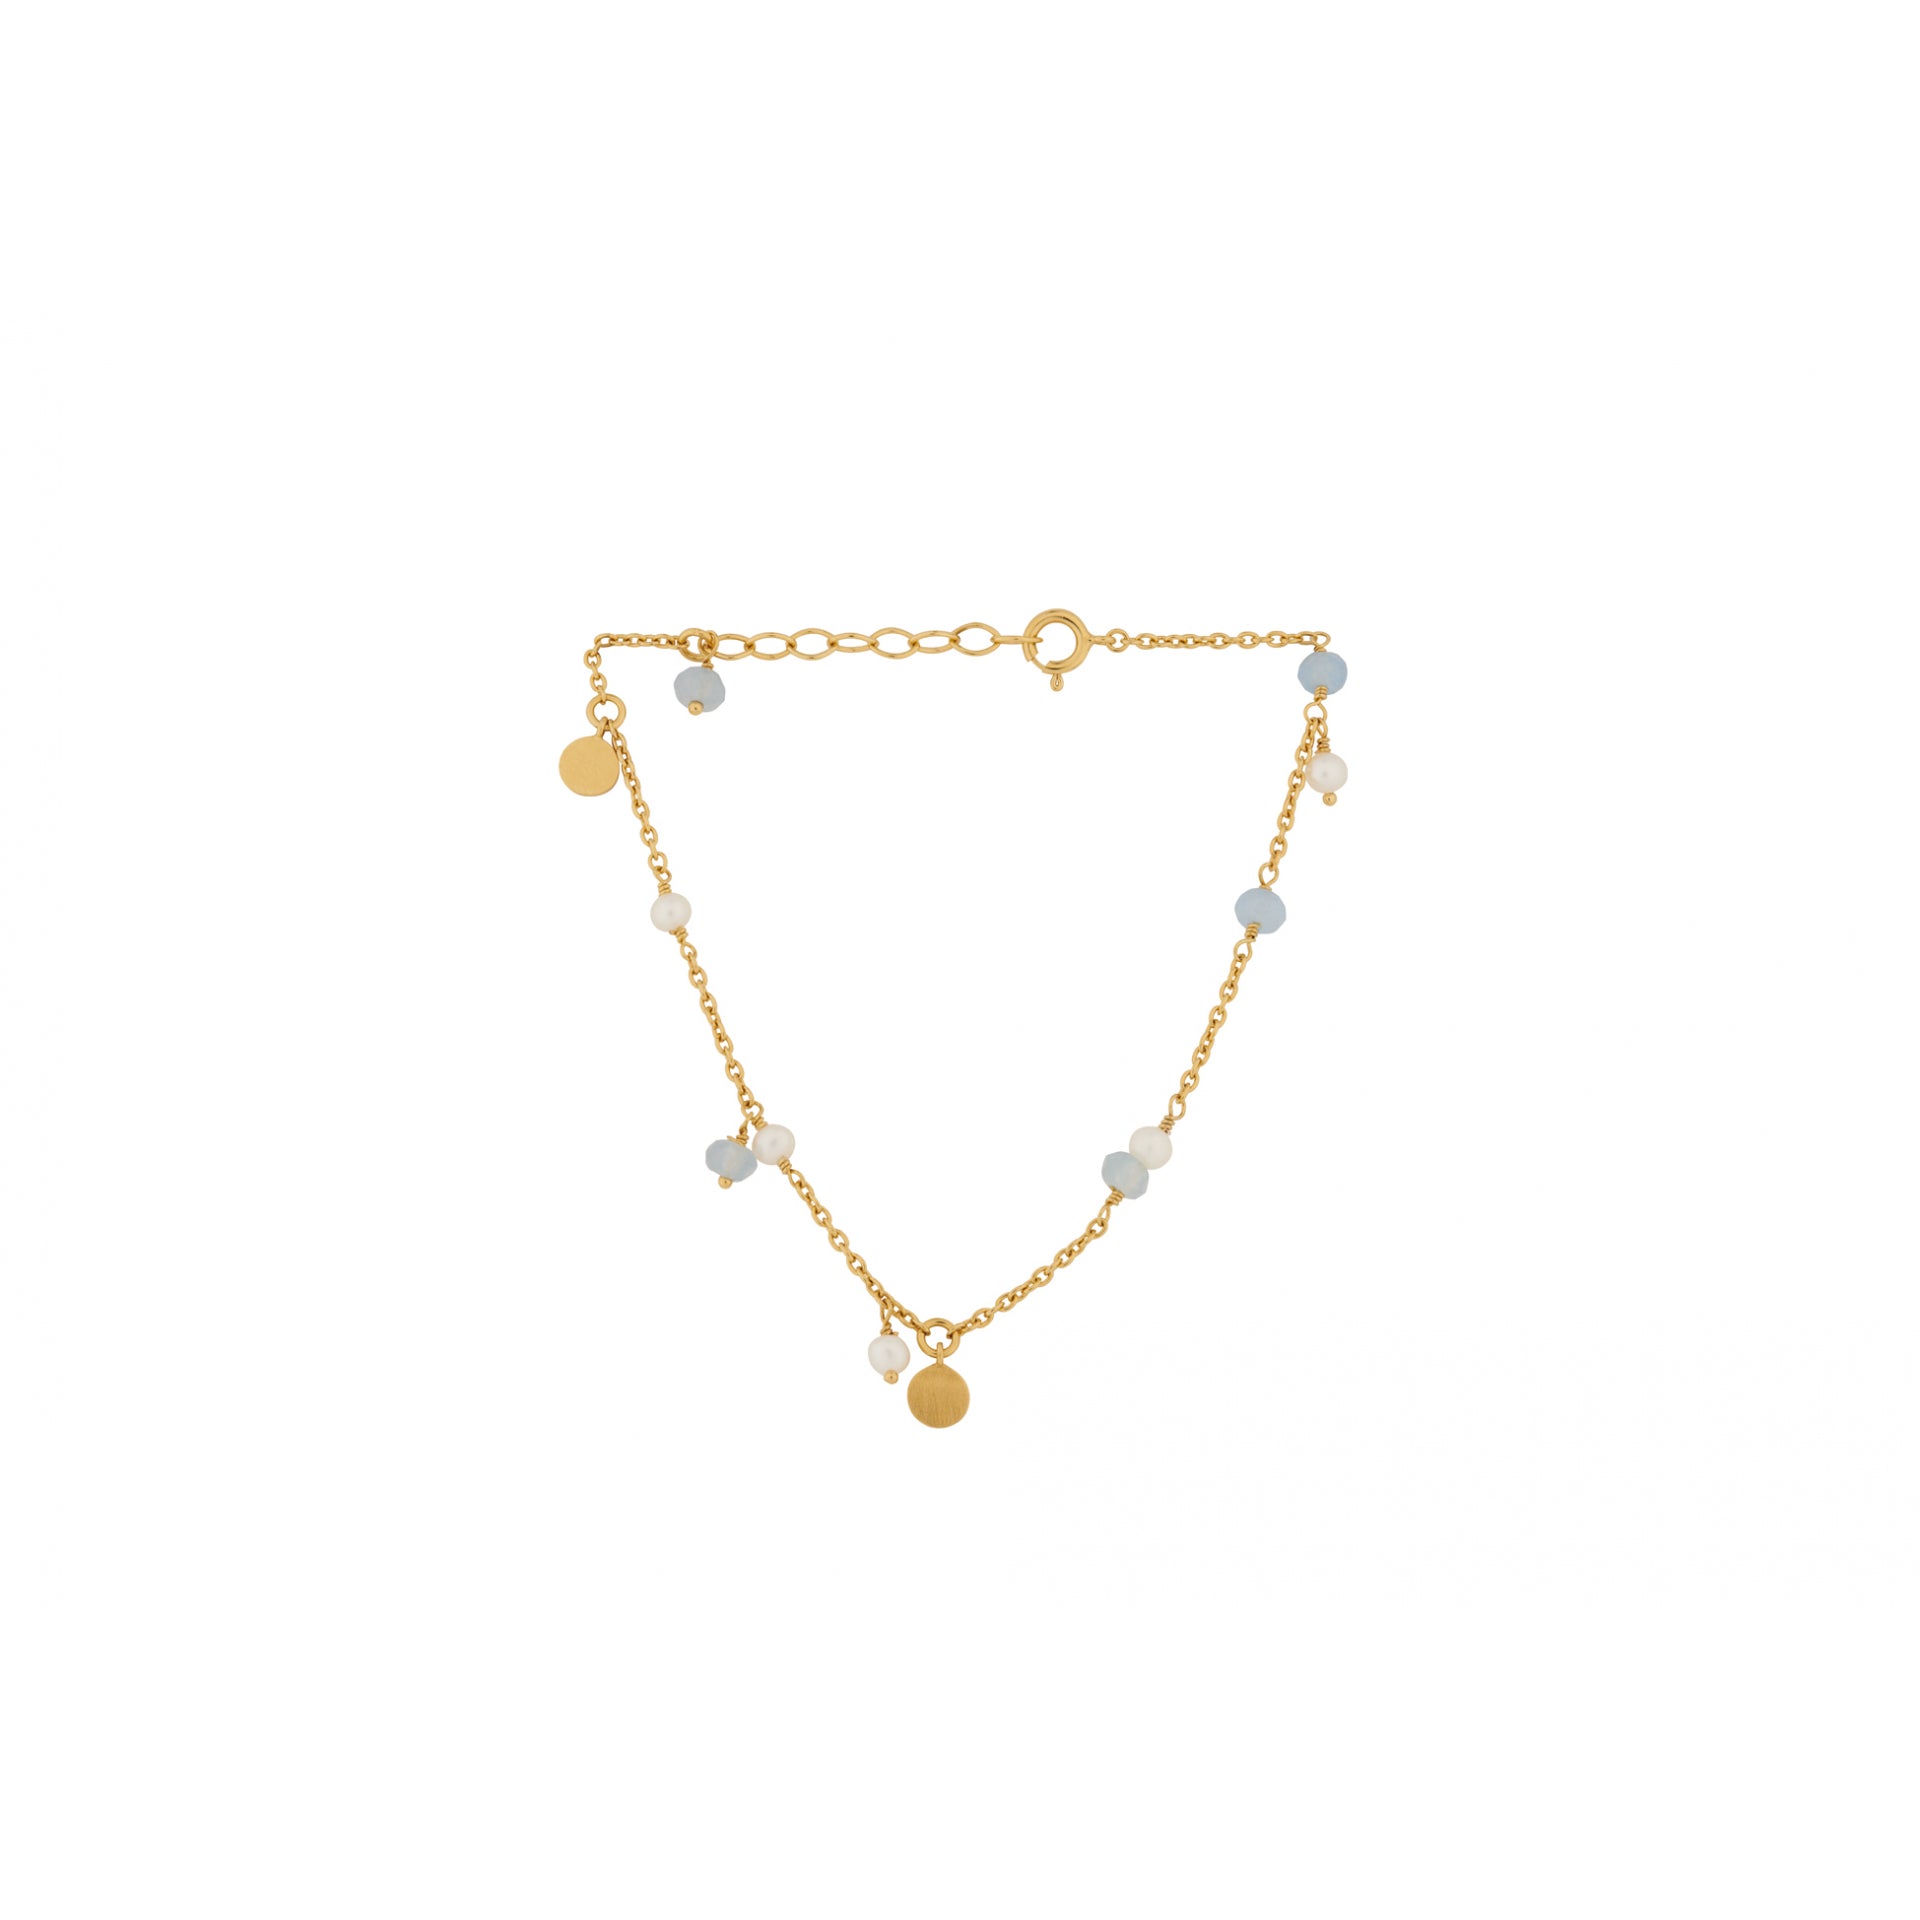 Afterglow Sea Bracelet in Gold w. Freshwater Pearls & Blue Agate Stones